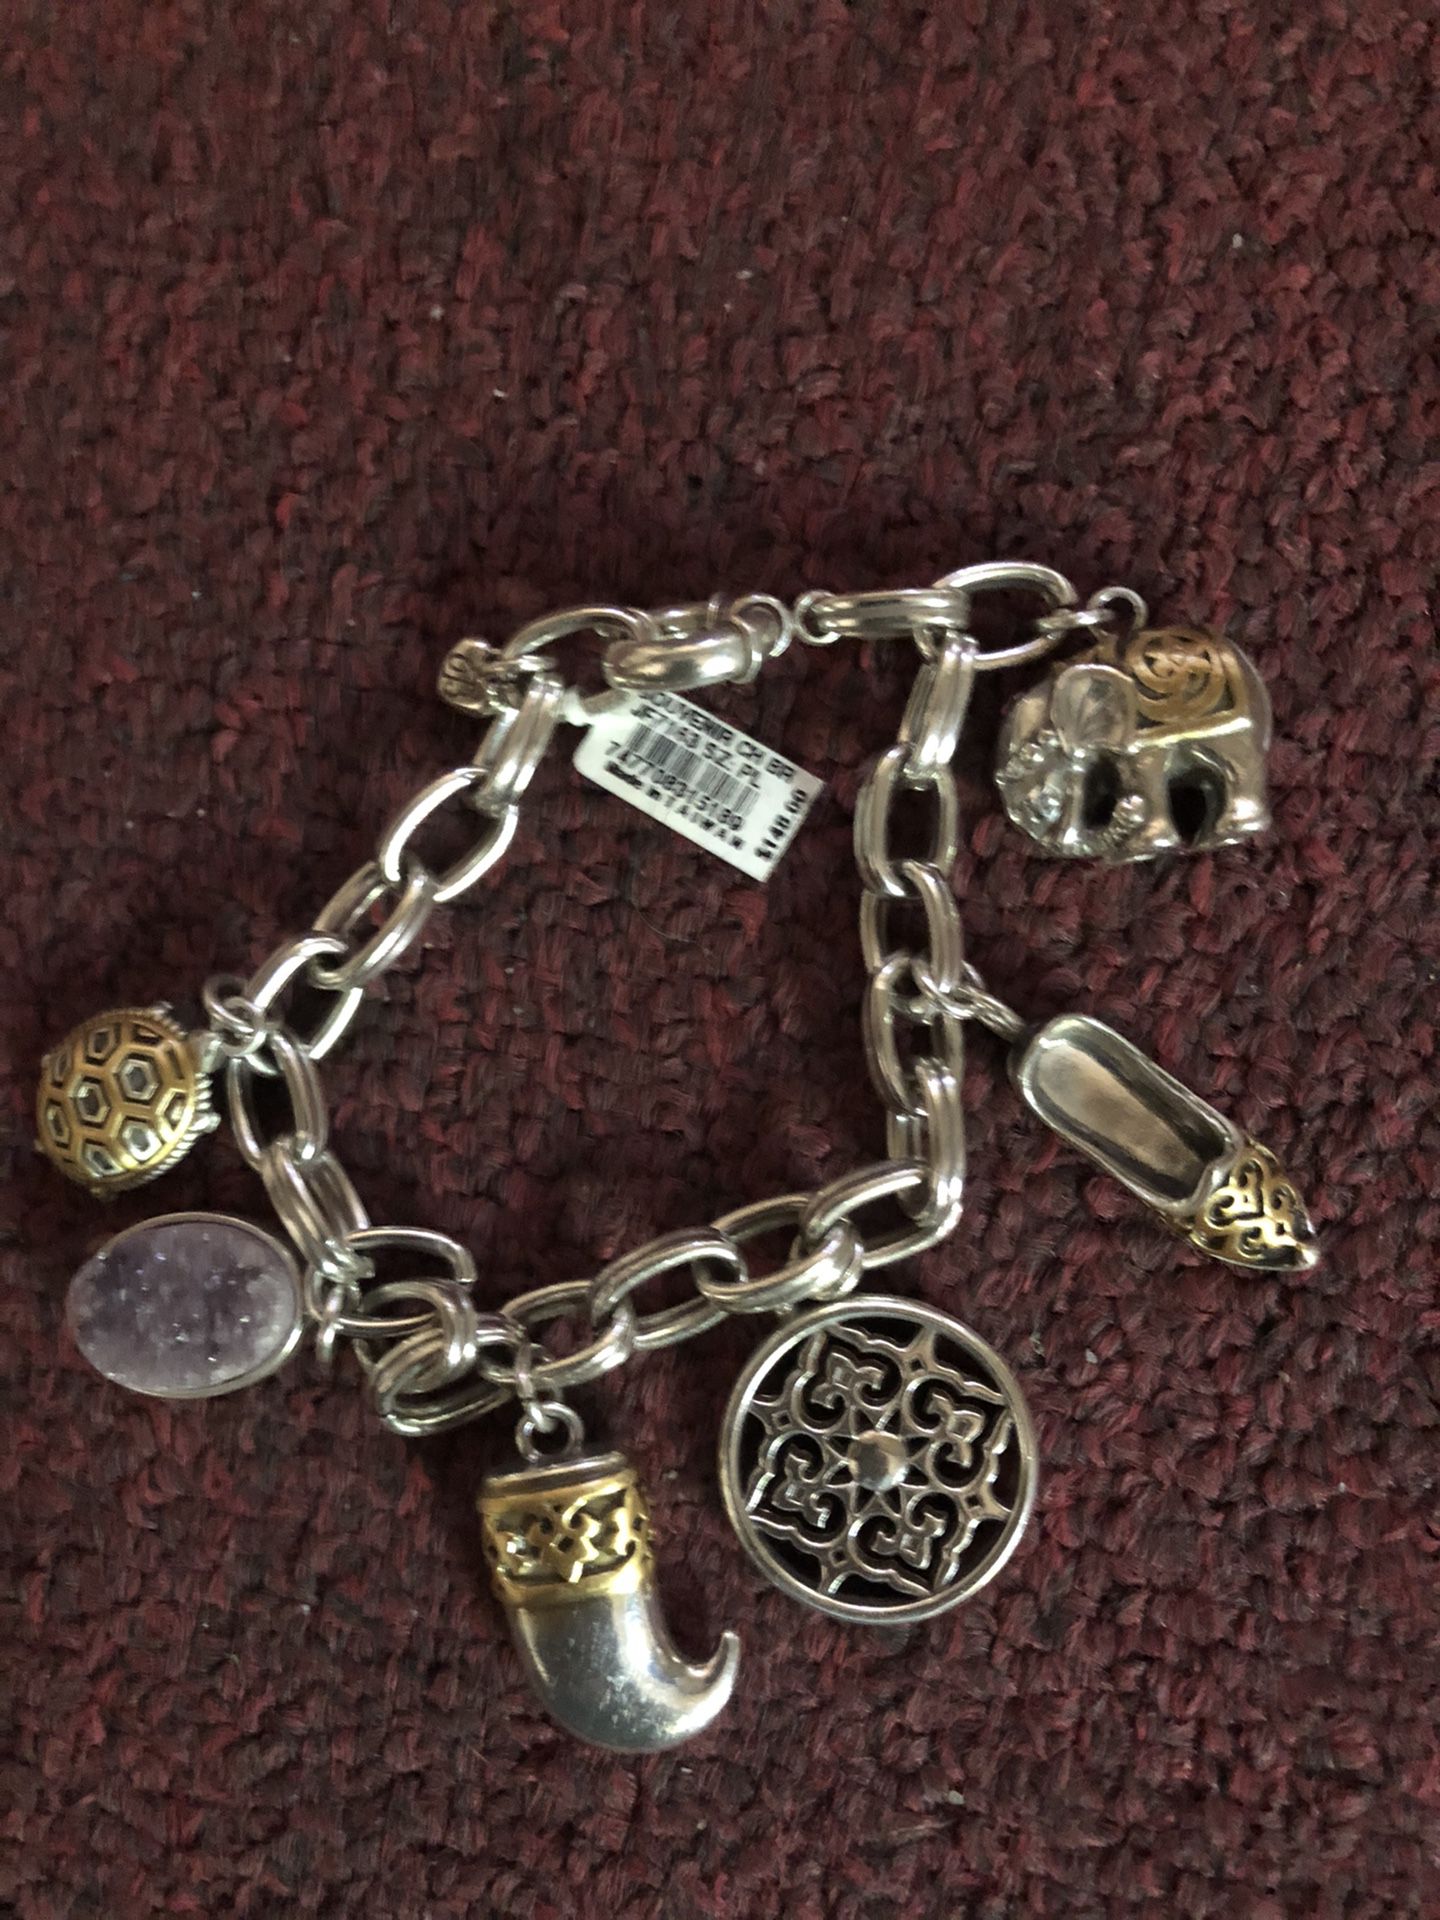 New charm bracelet worth 142